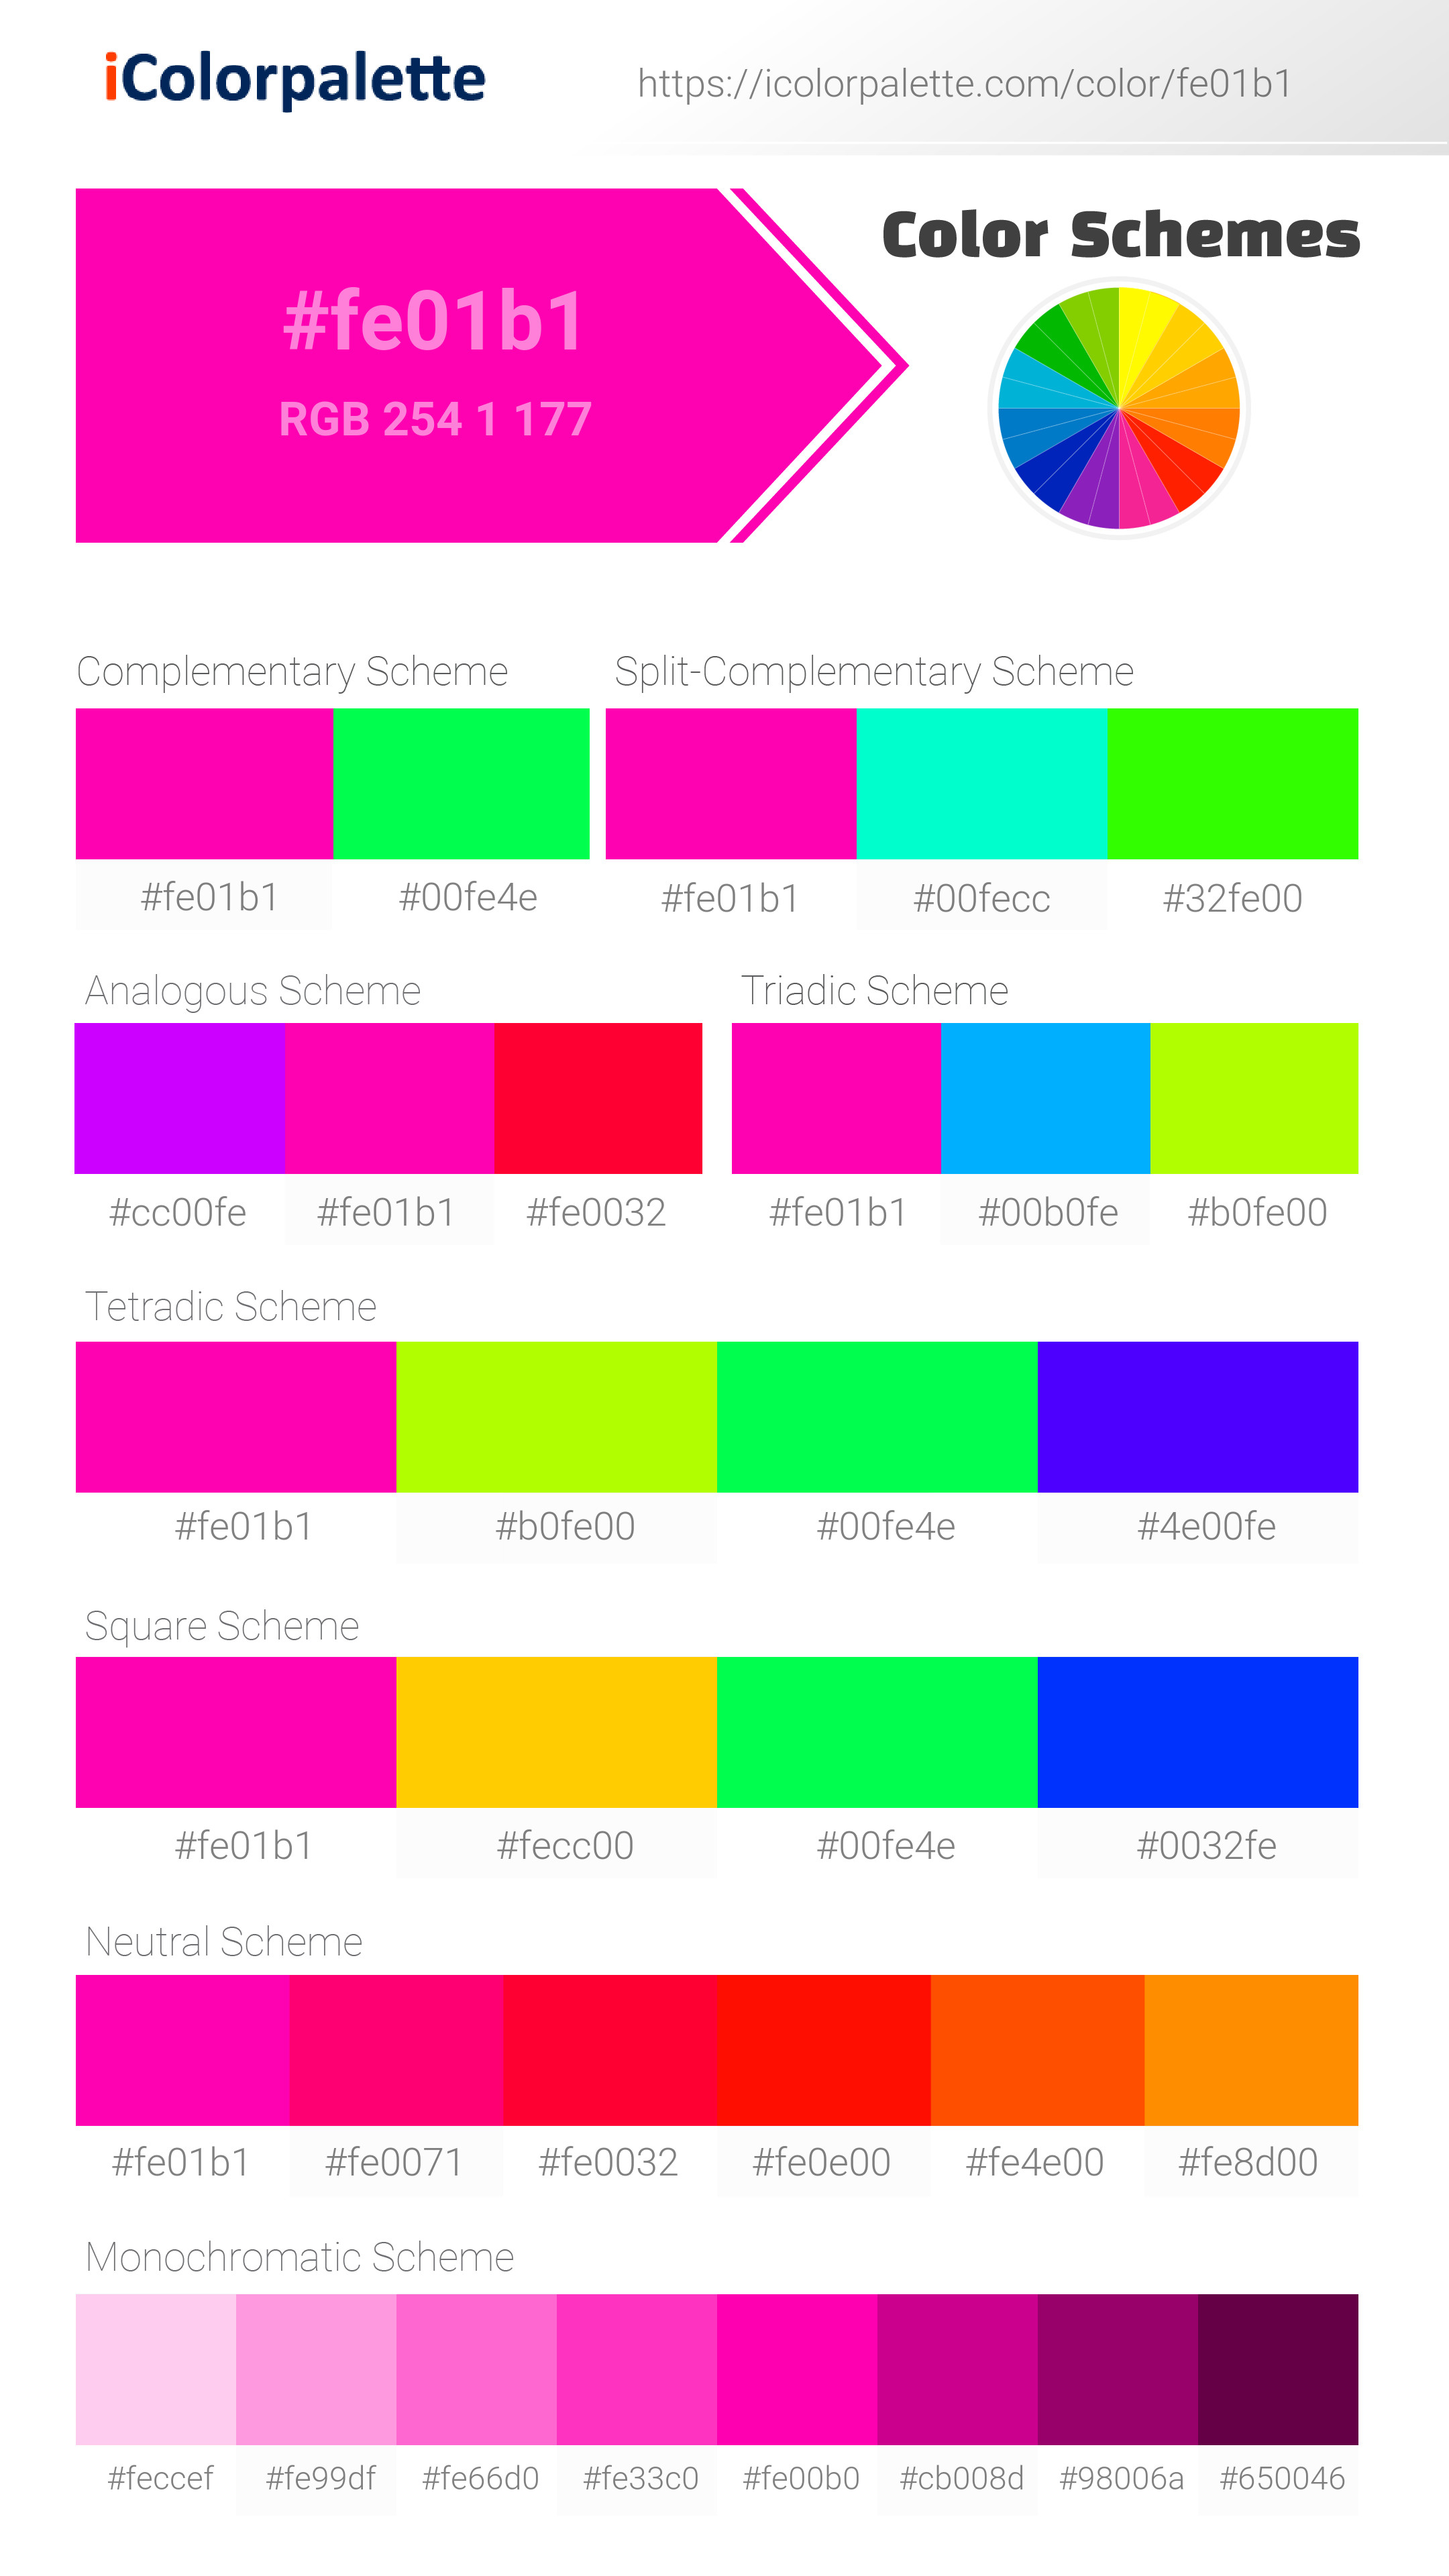 https://www.icolorpalette.com/download/schemes/fe01b1_colorschemes_icolorpalette.jpg